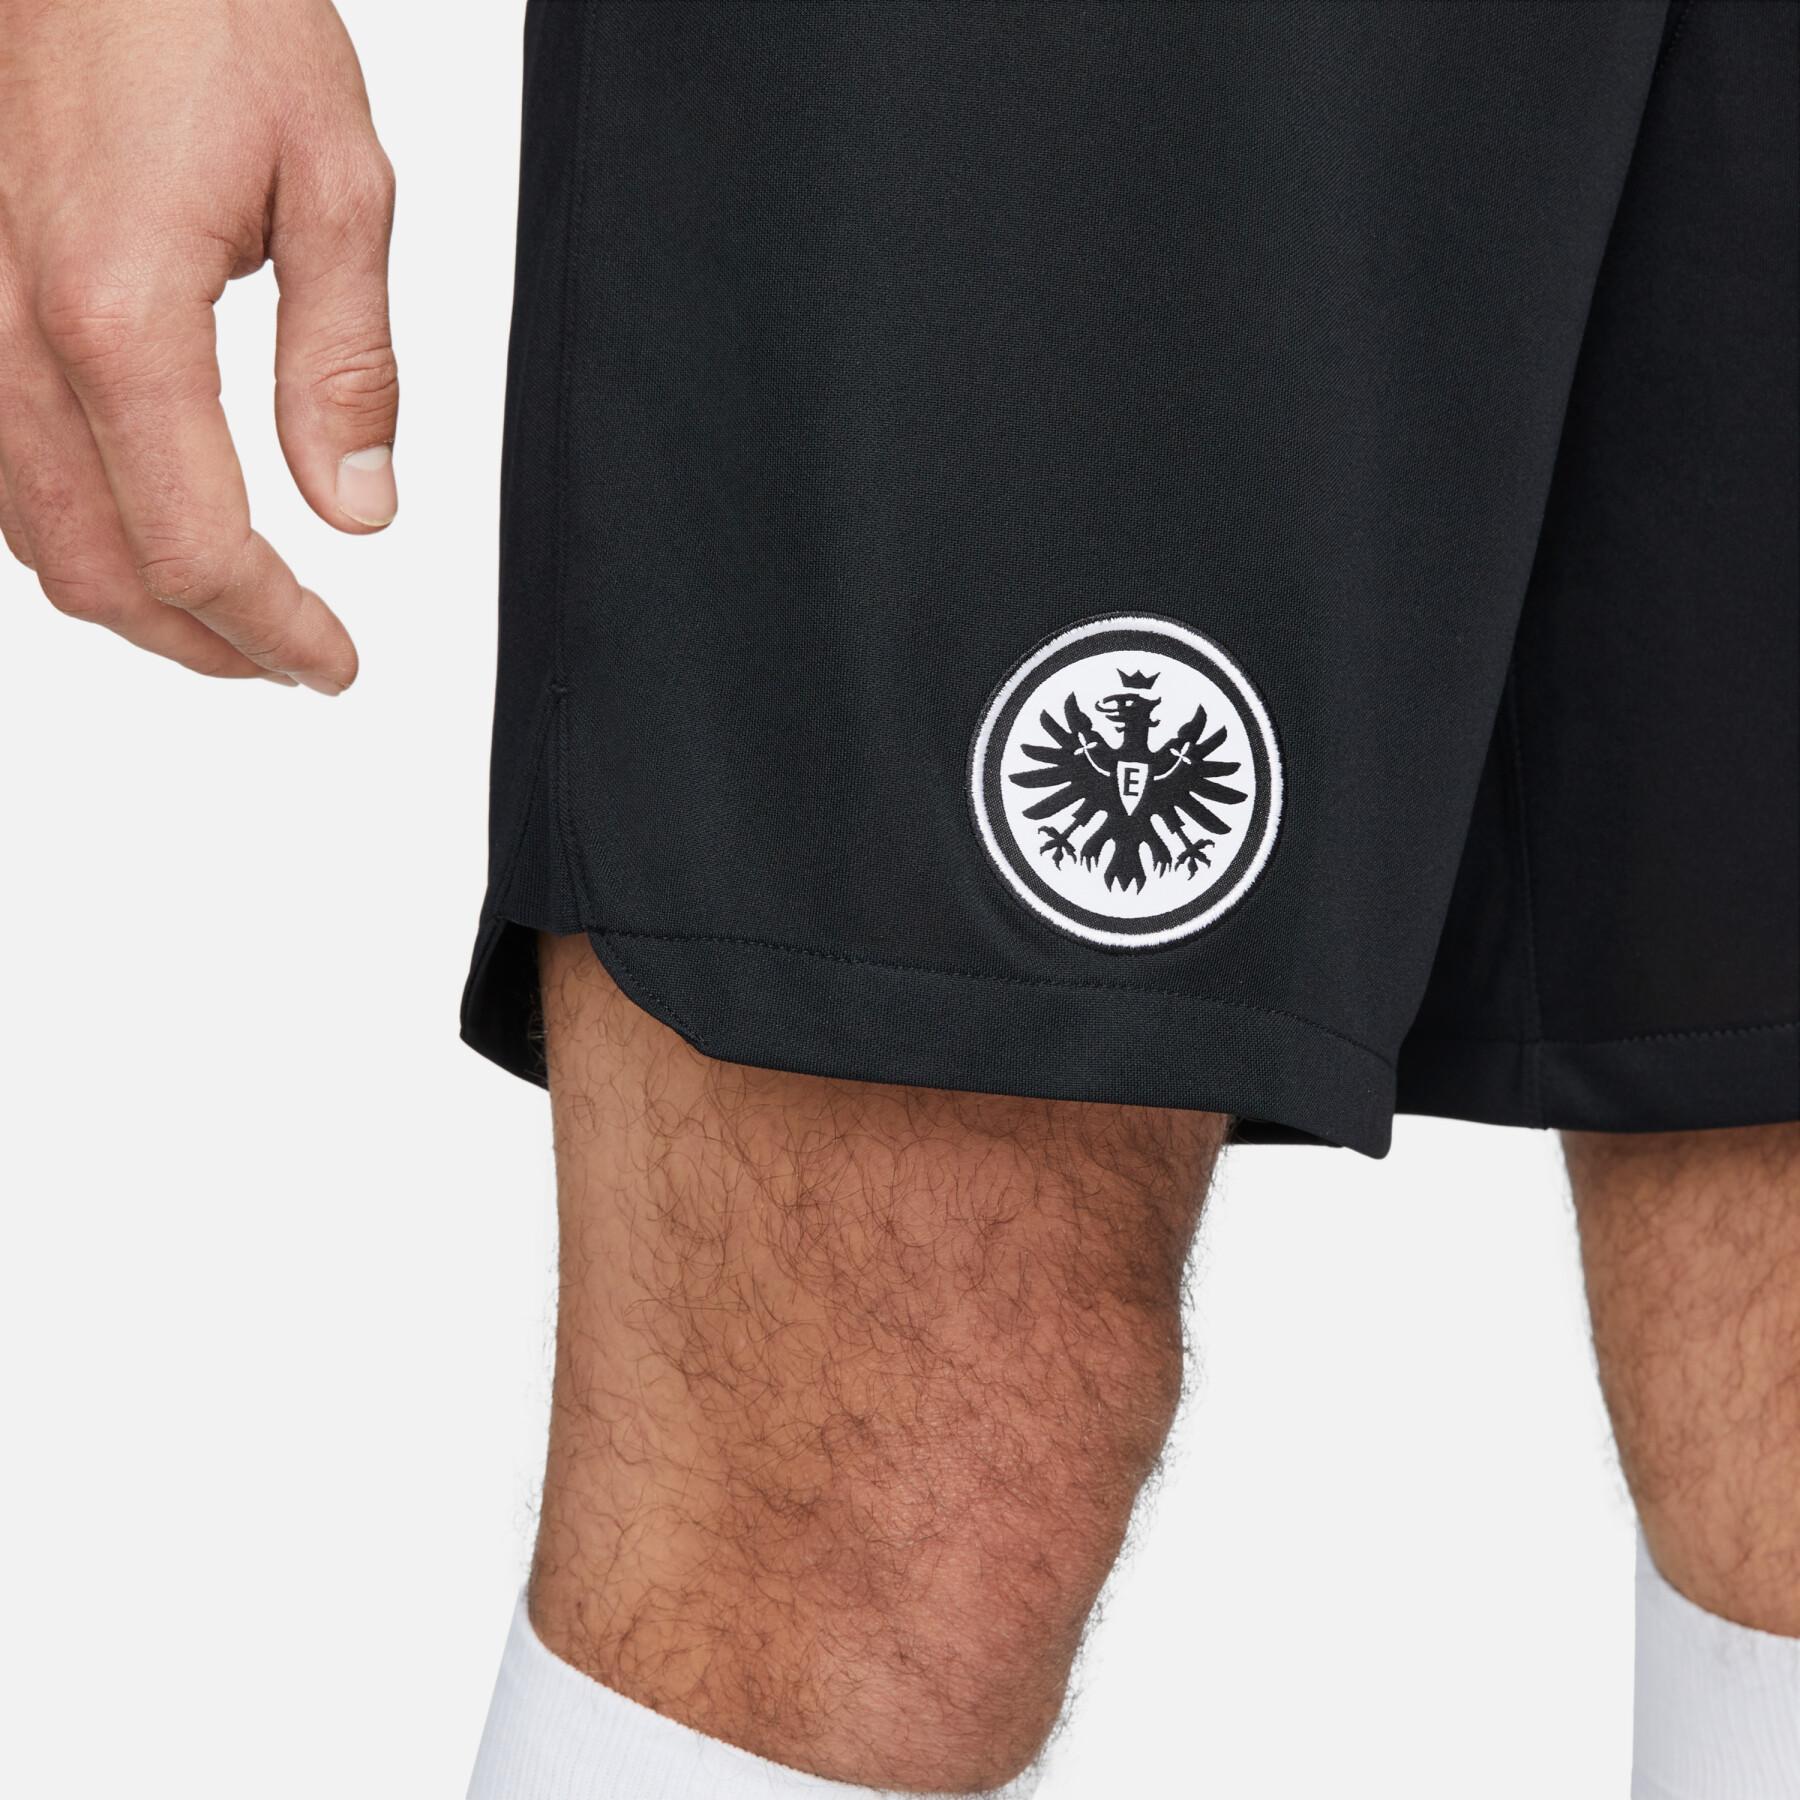 Hemma/borta shorts Eintracht Francfort 2022/23